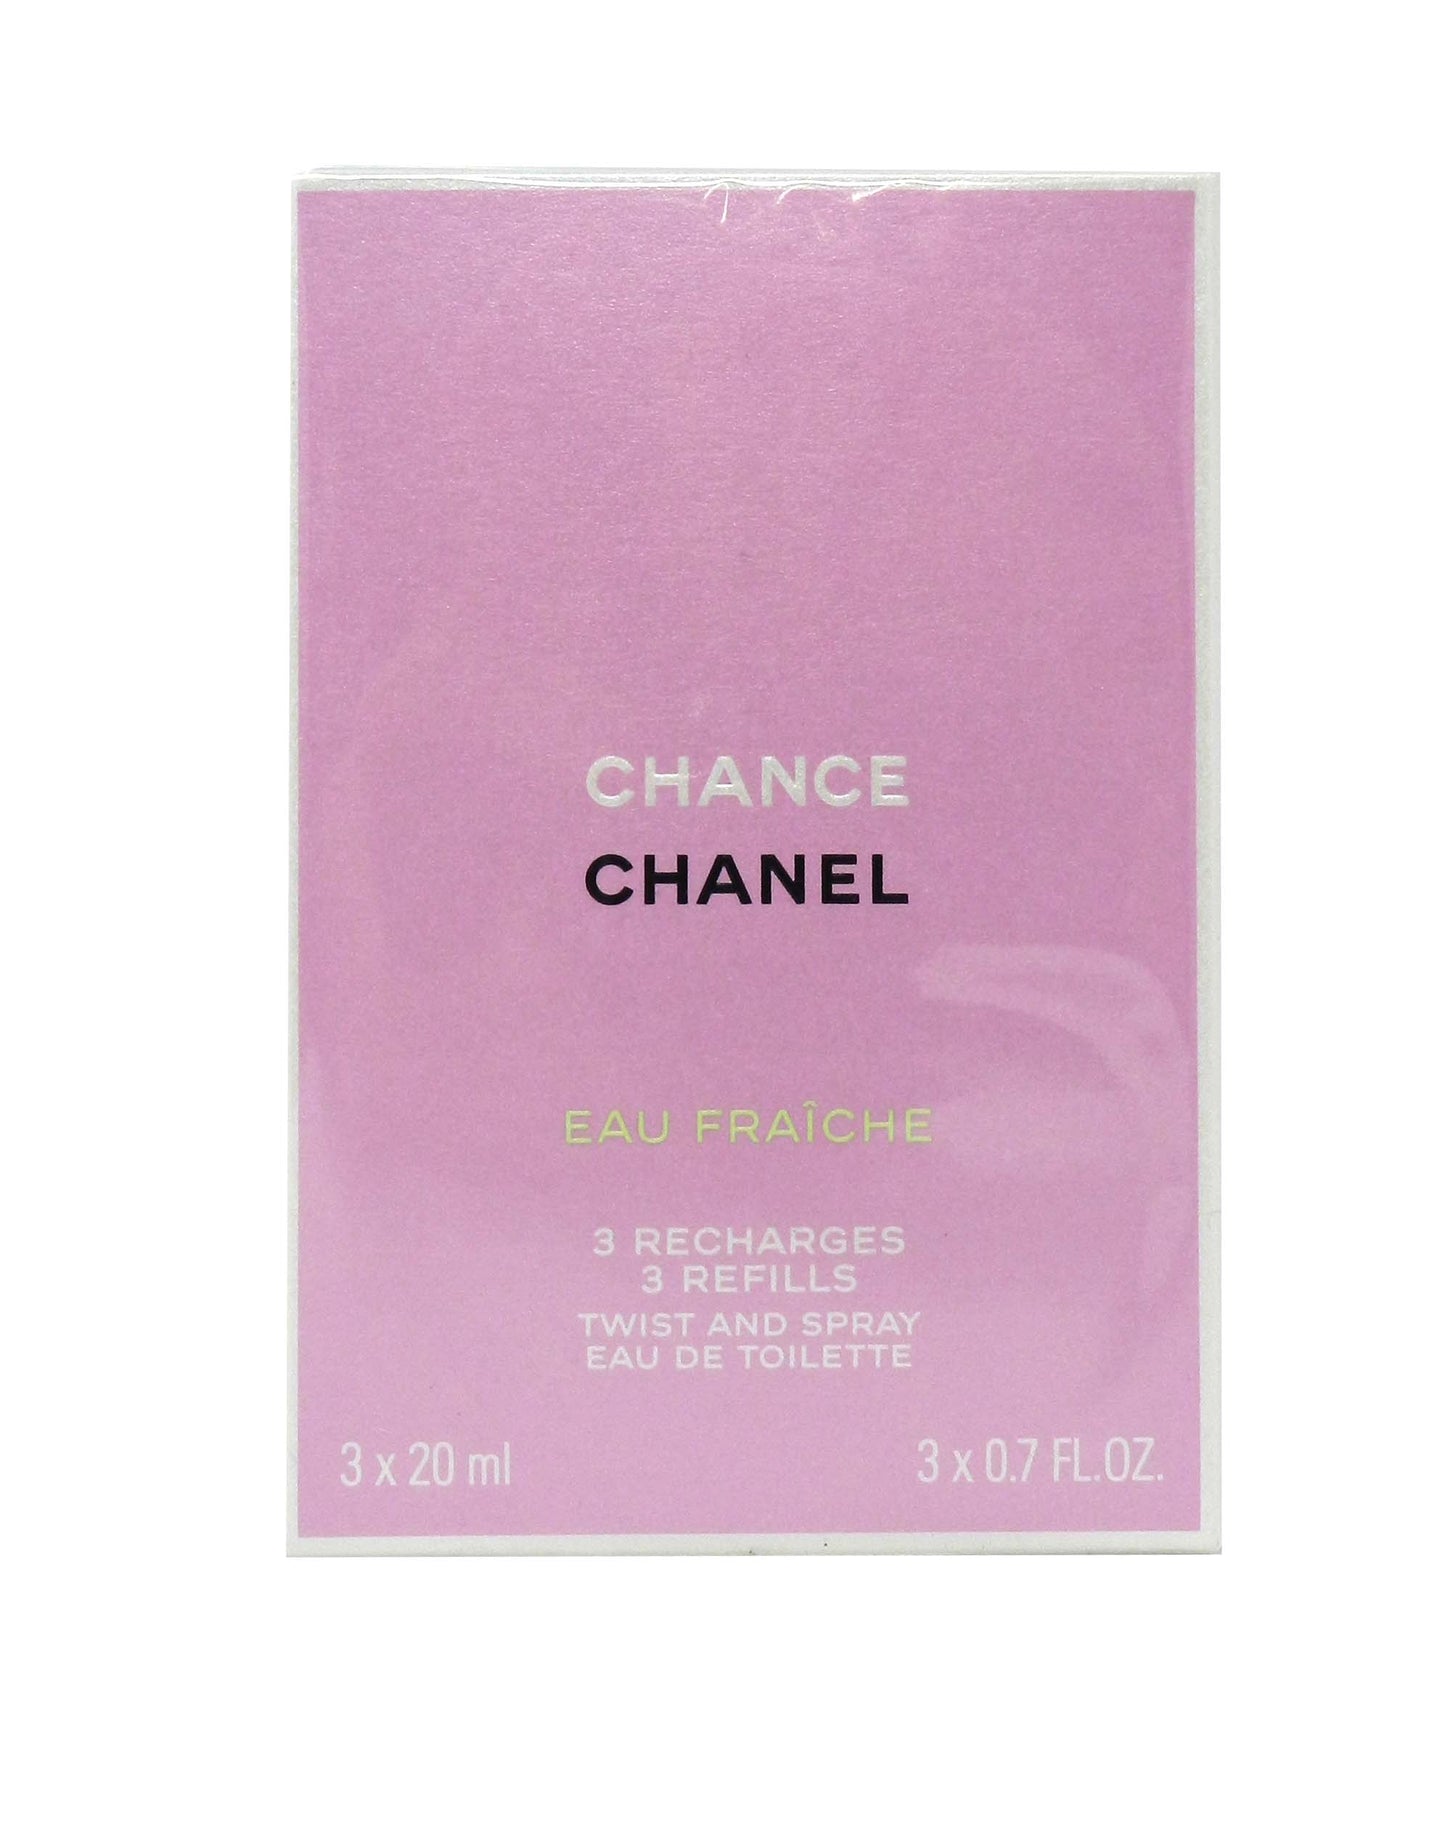 chance chanel eau tendre 5 oz perfume for women